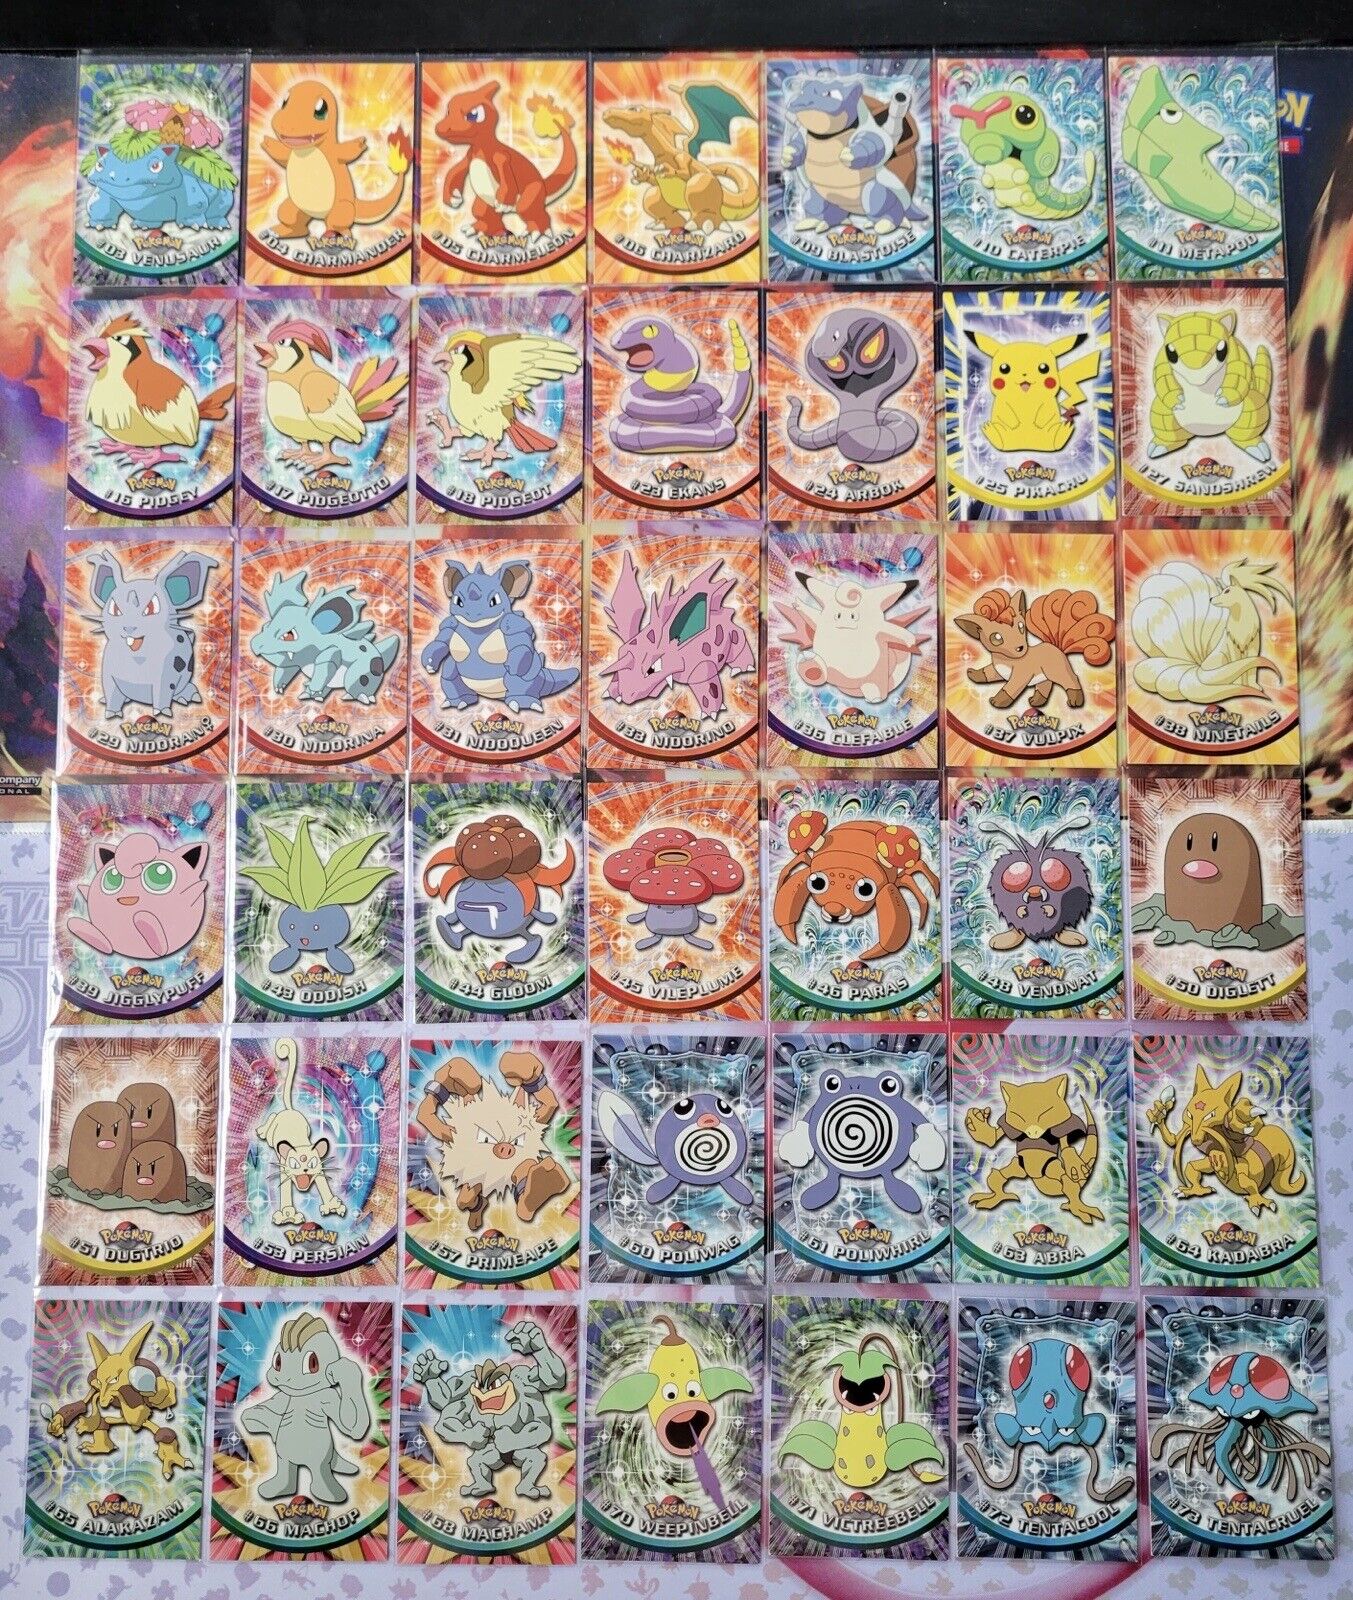 Pokémon Topps Card Lot - Series 1